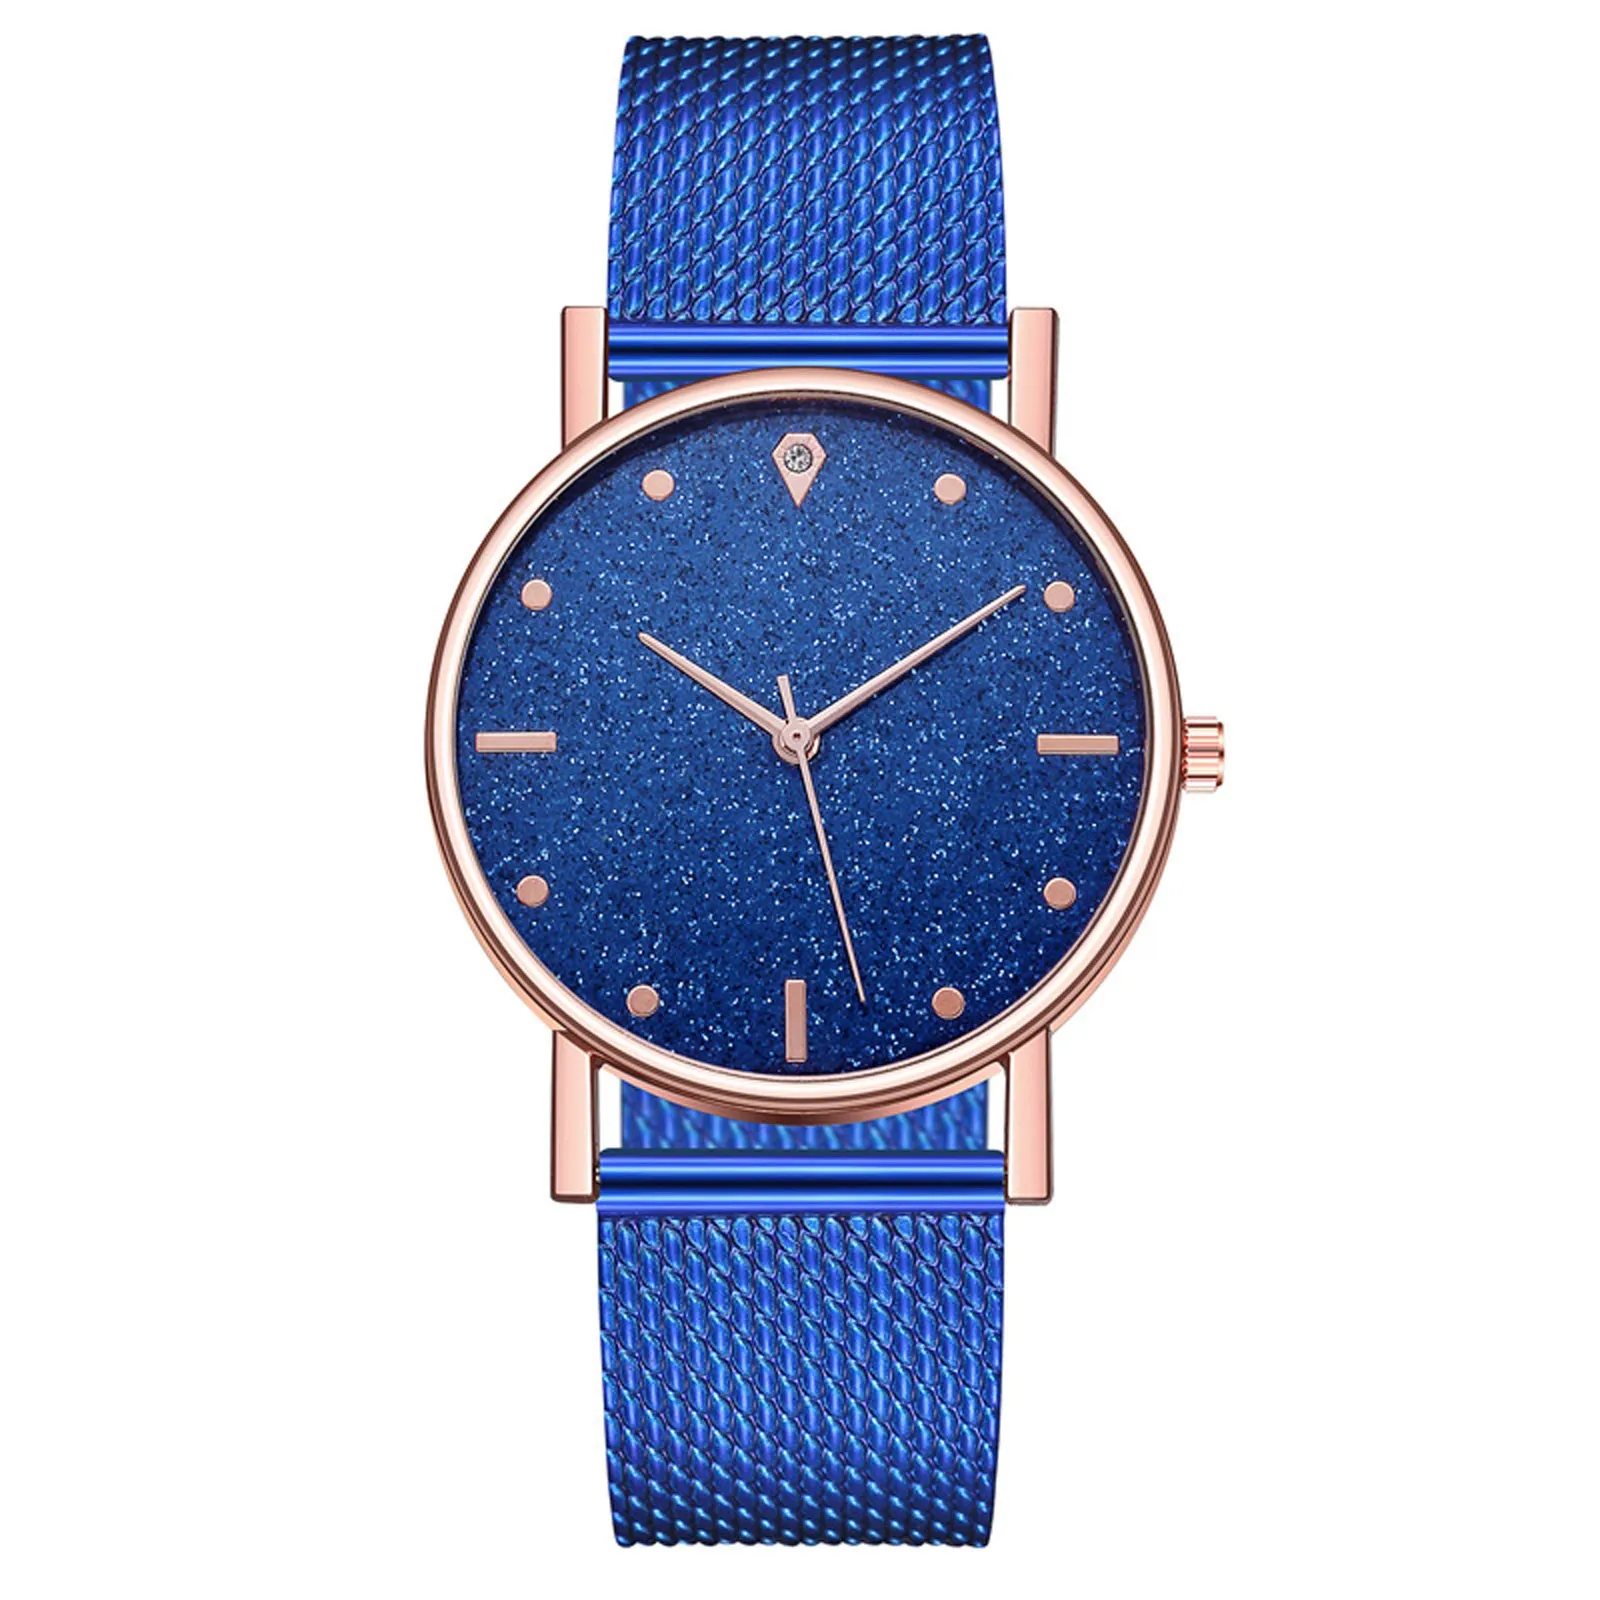 

Women Watch Luxury Watches Quartz Watch Stainless Steel Dial Casual Bracele Watch Saat KadıN Kol Saati Saat Bayan Kol Saati